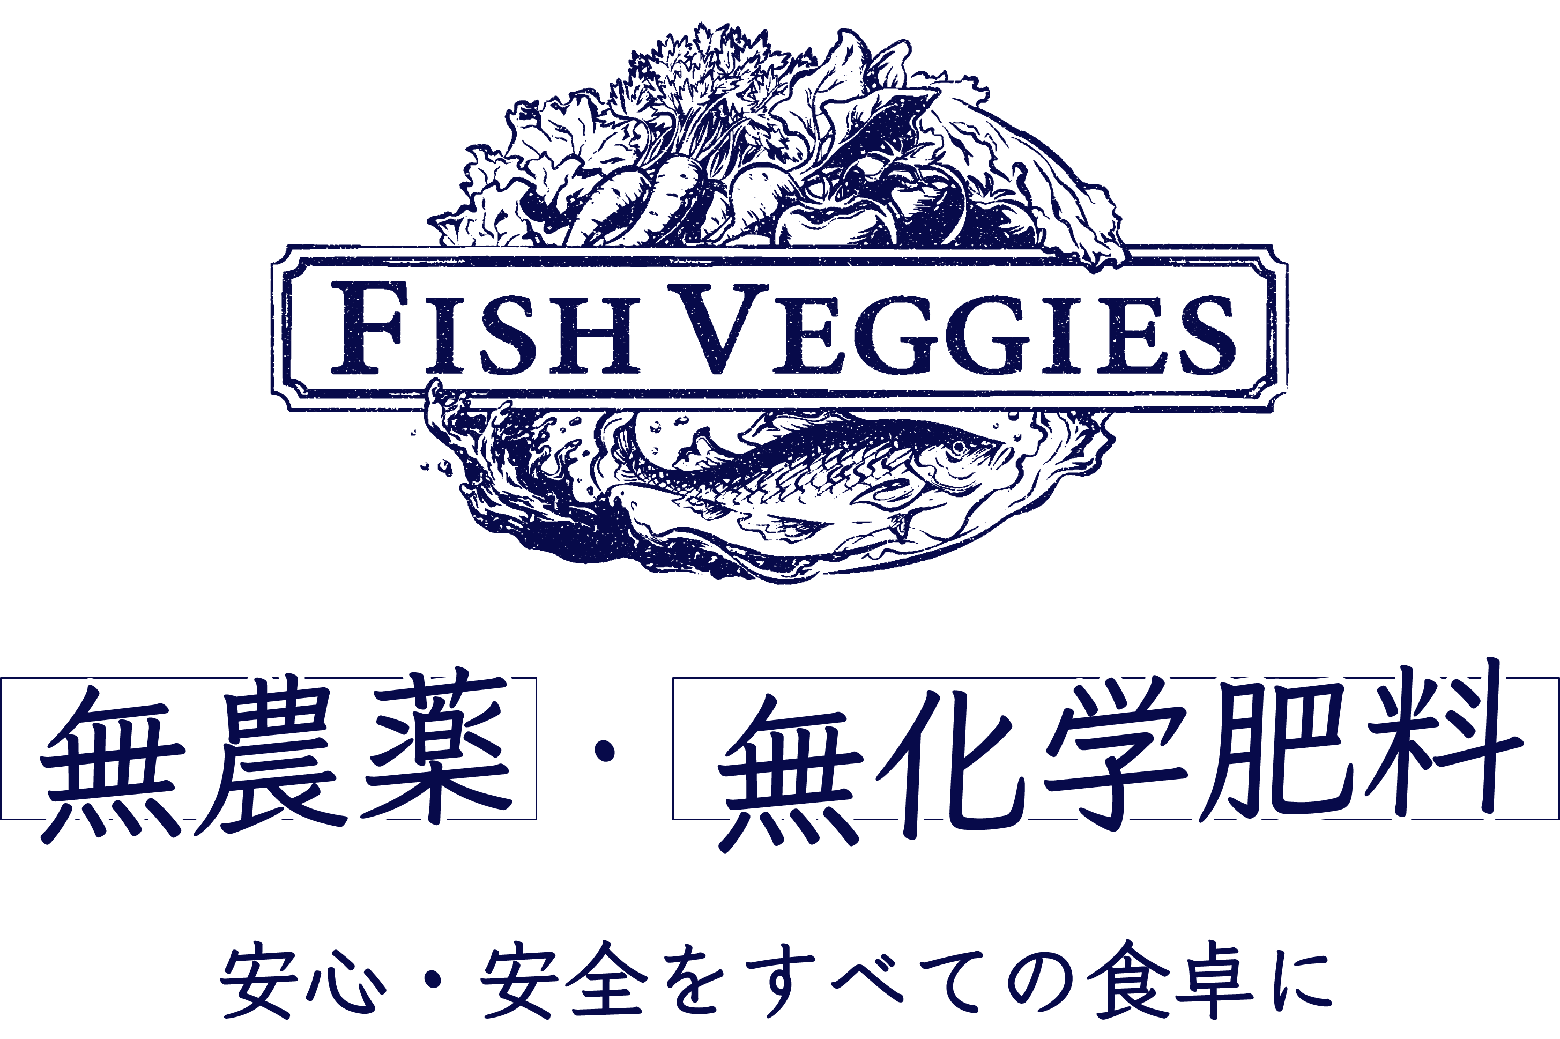 FISH VEGGIES -無農薬・無化学肥料 安心・安全をすべての食卓に-